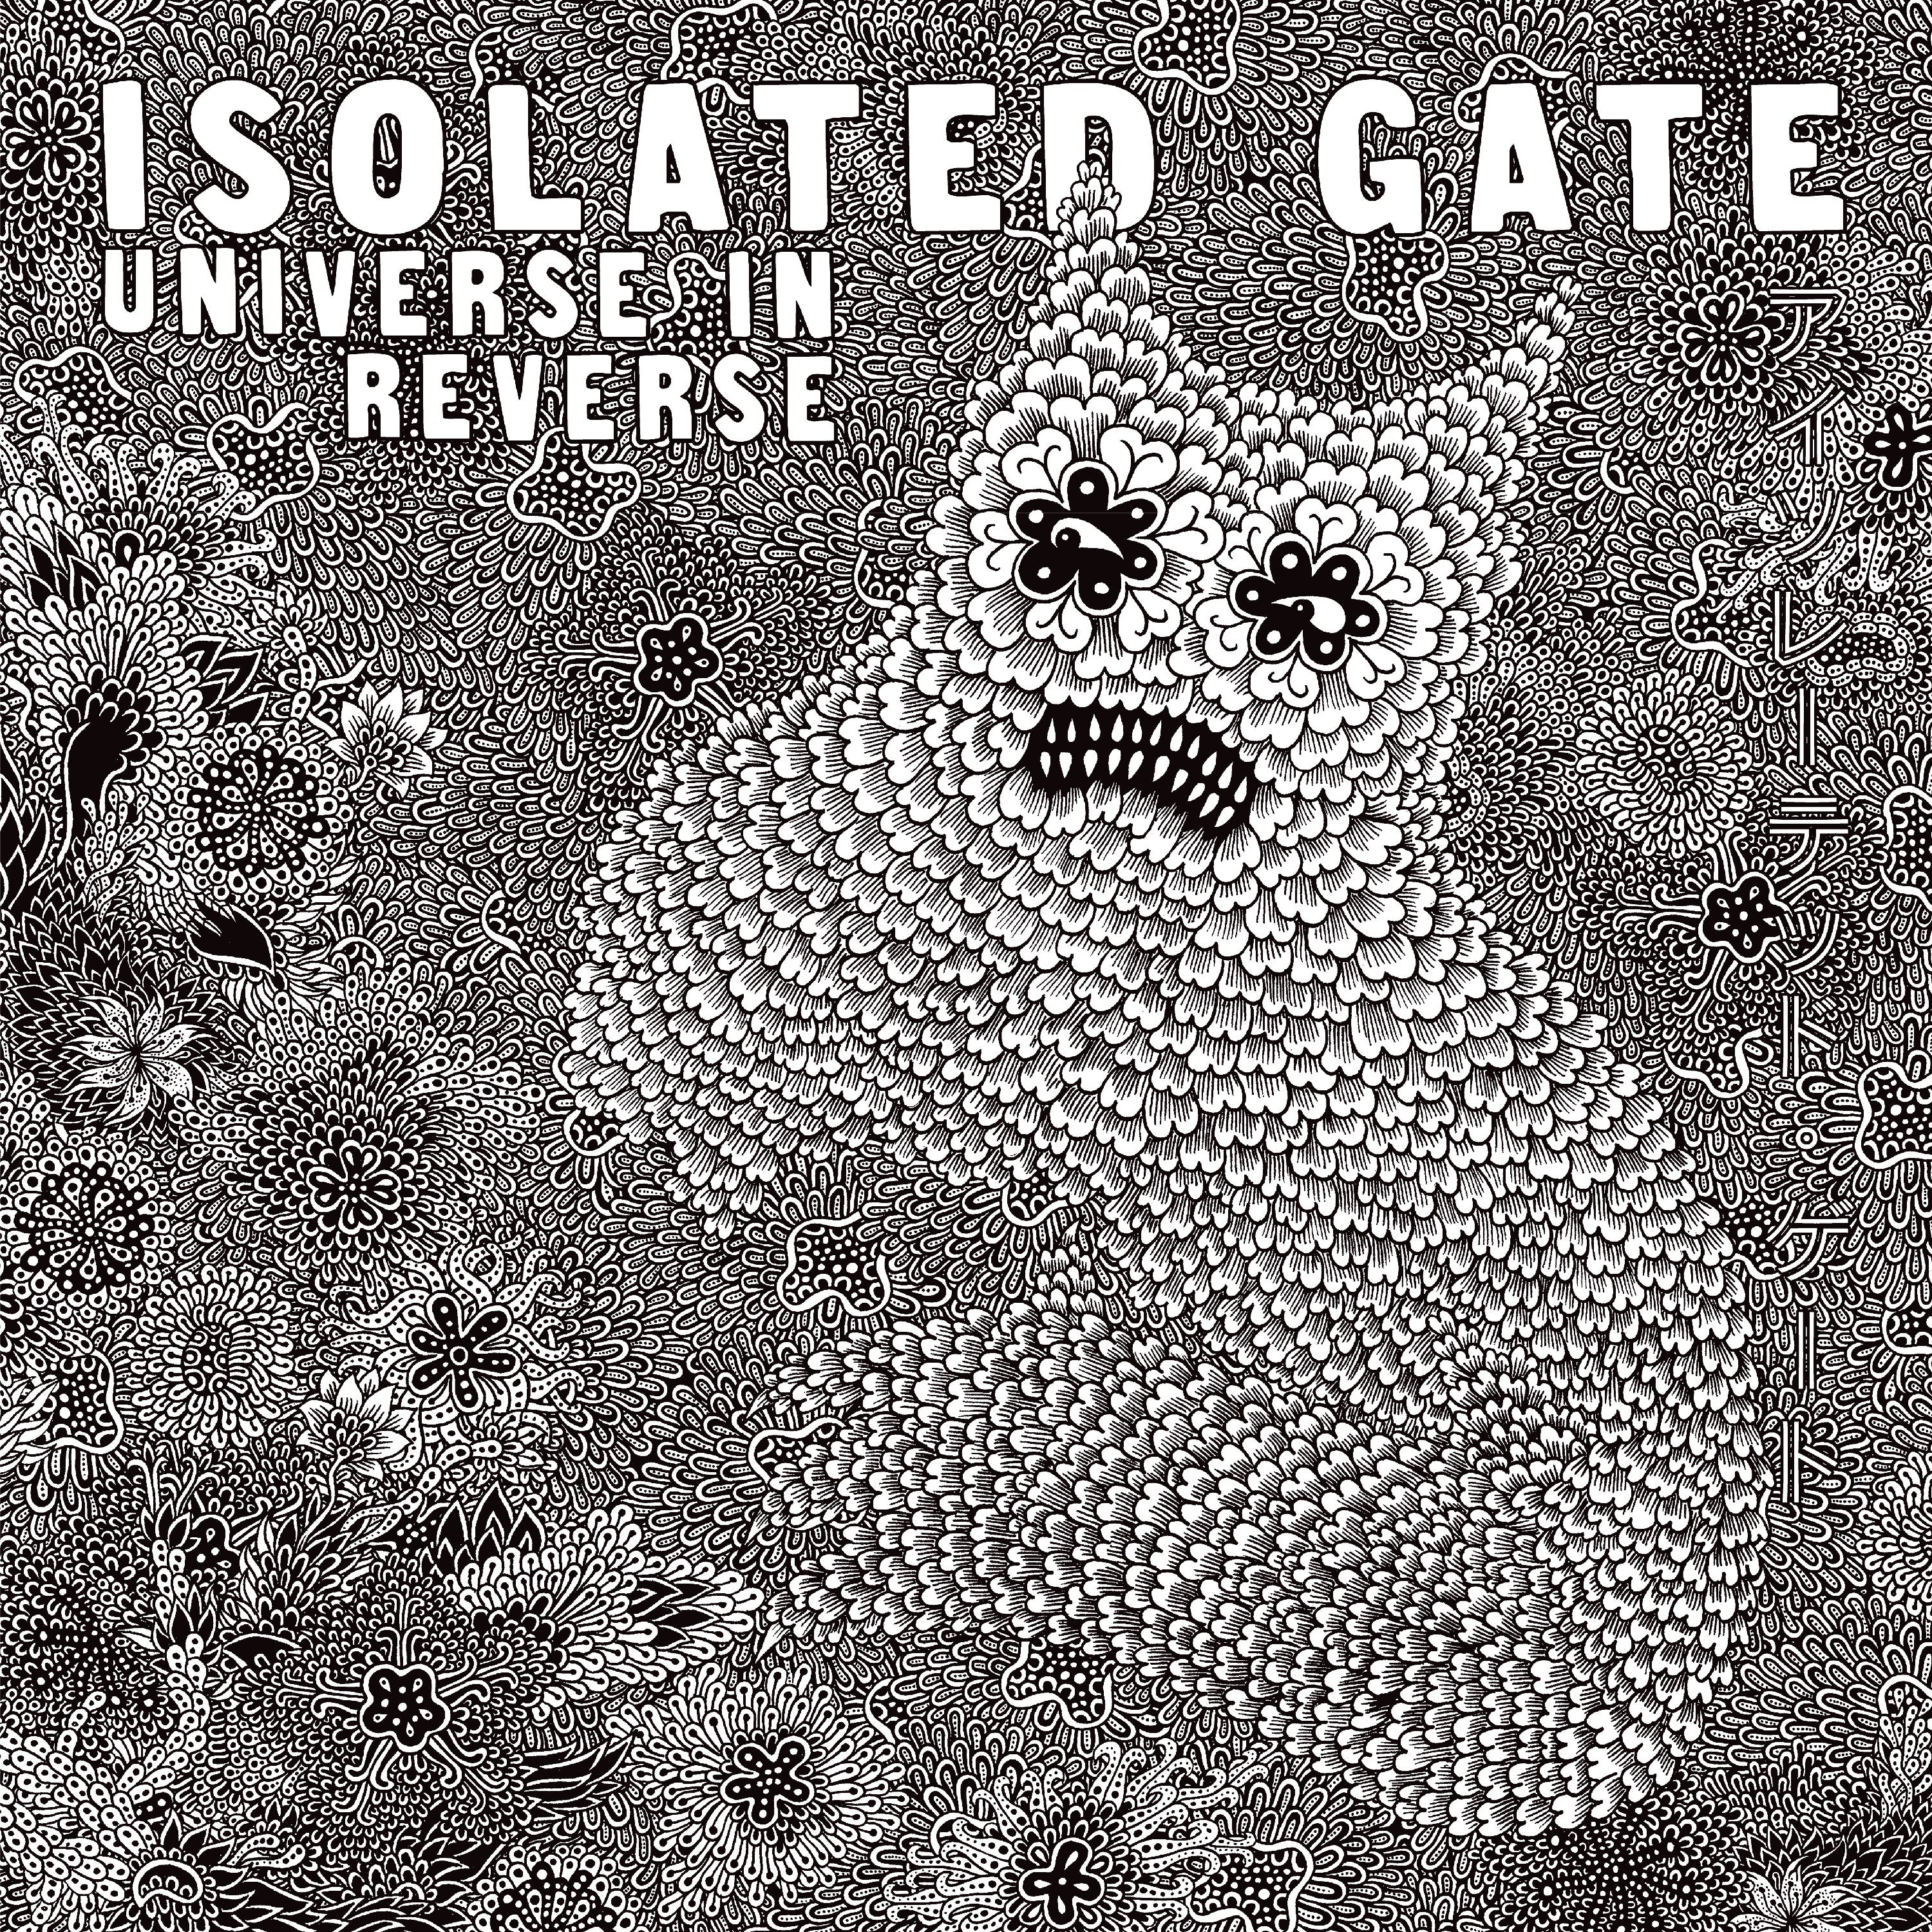 Isolated Gate - Universe in Reverse + No Heart No Home + Hapax Legomenon BUNDLE